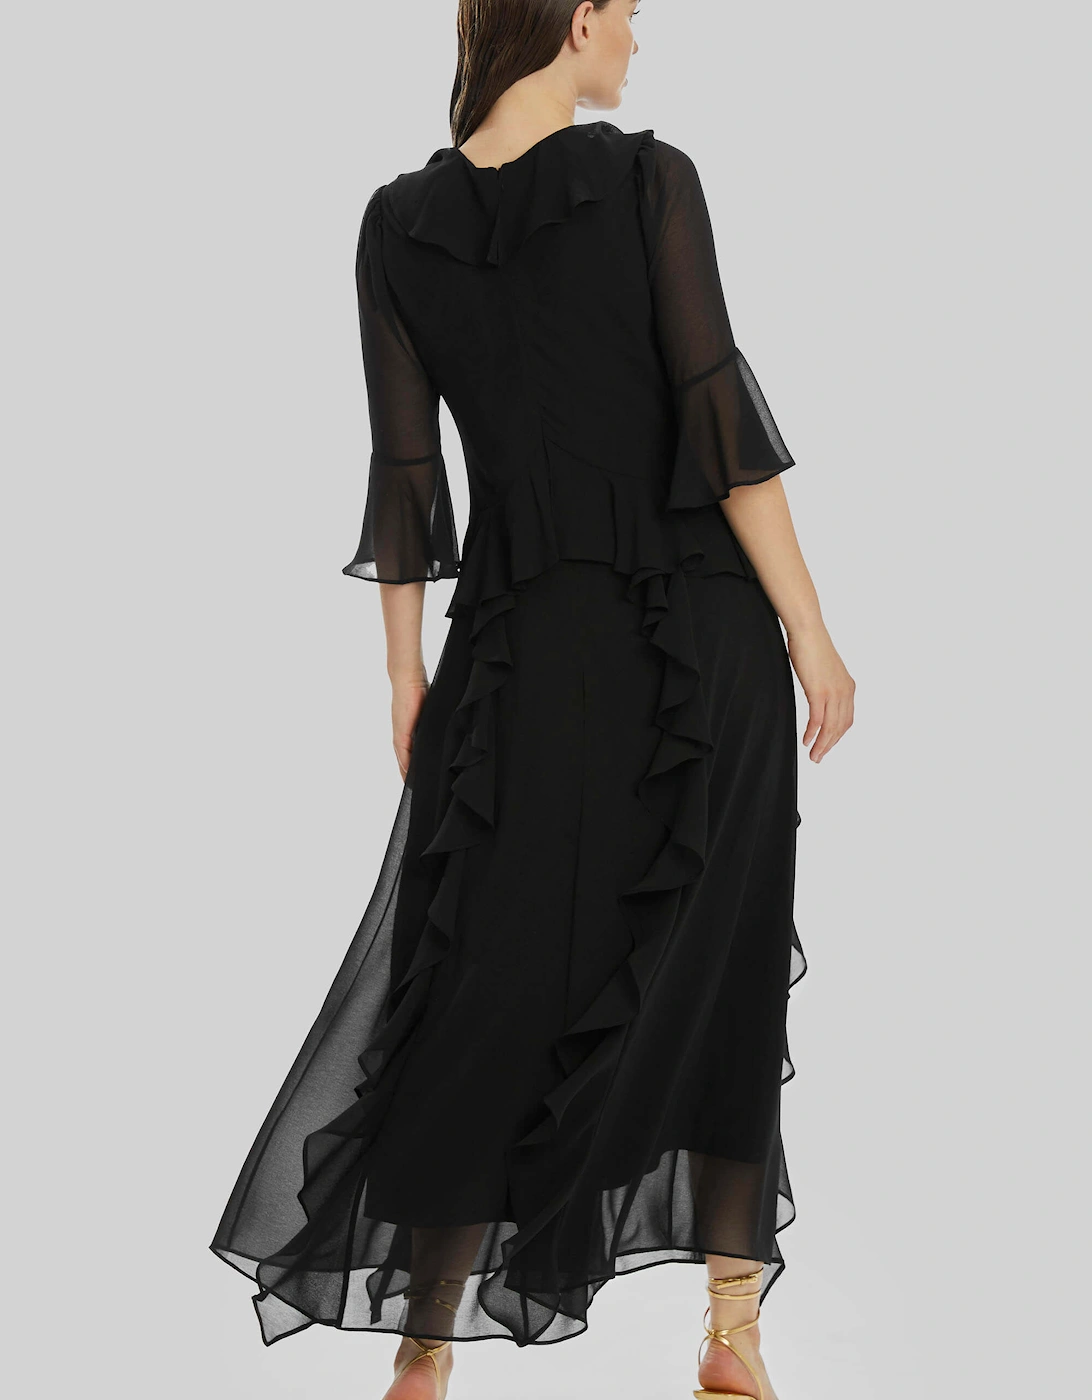 V-neck Chiffon Ruffle Dress In Black